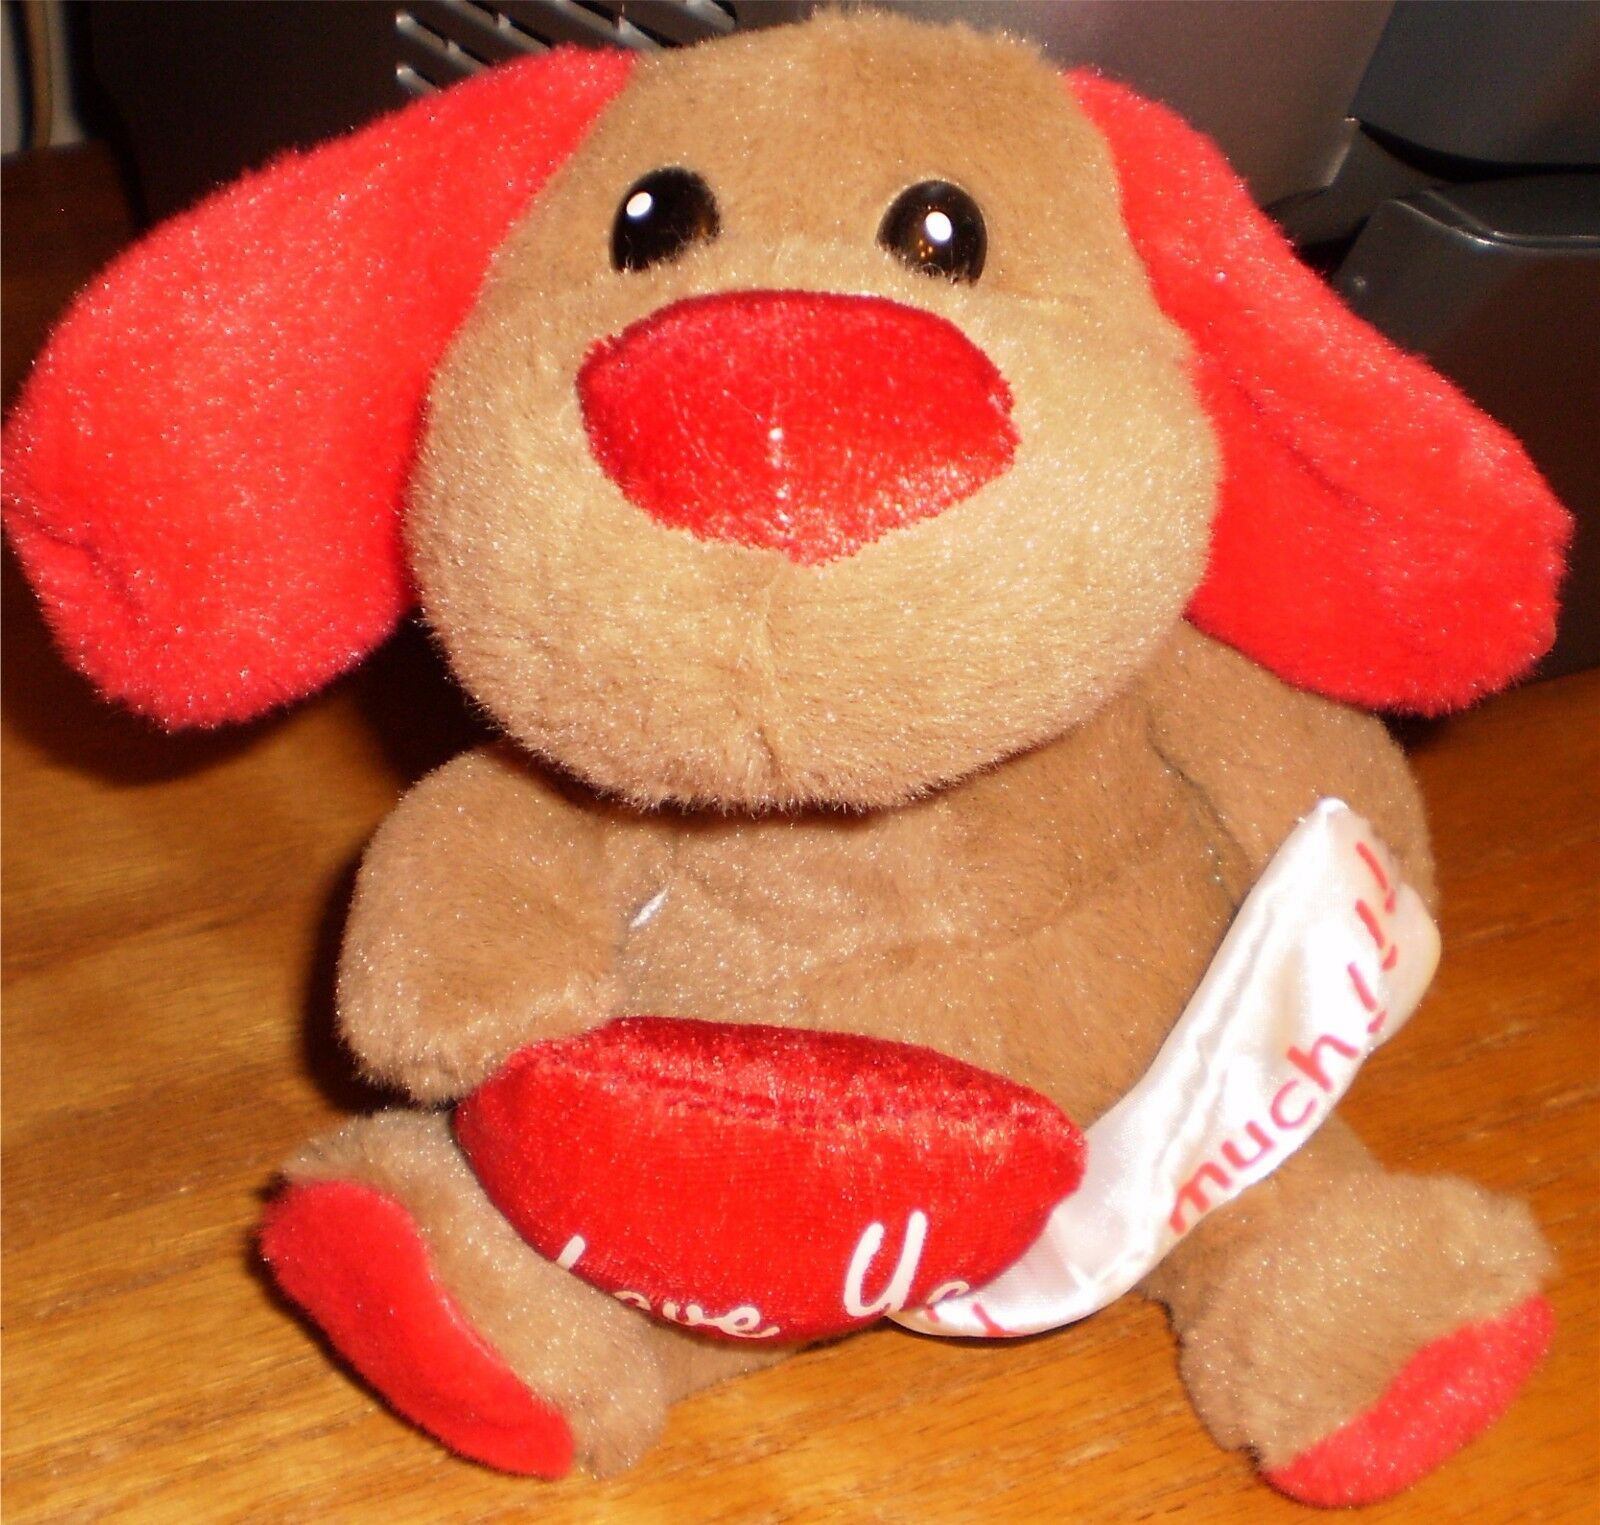 Stuffed Animal Brown DOG Love Ya This Much - $2.99